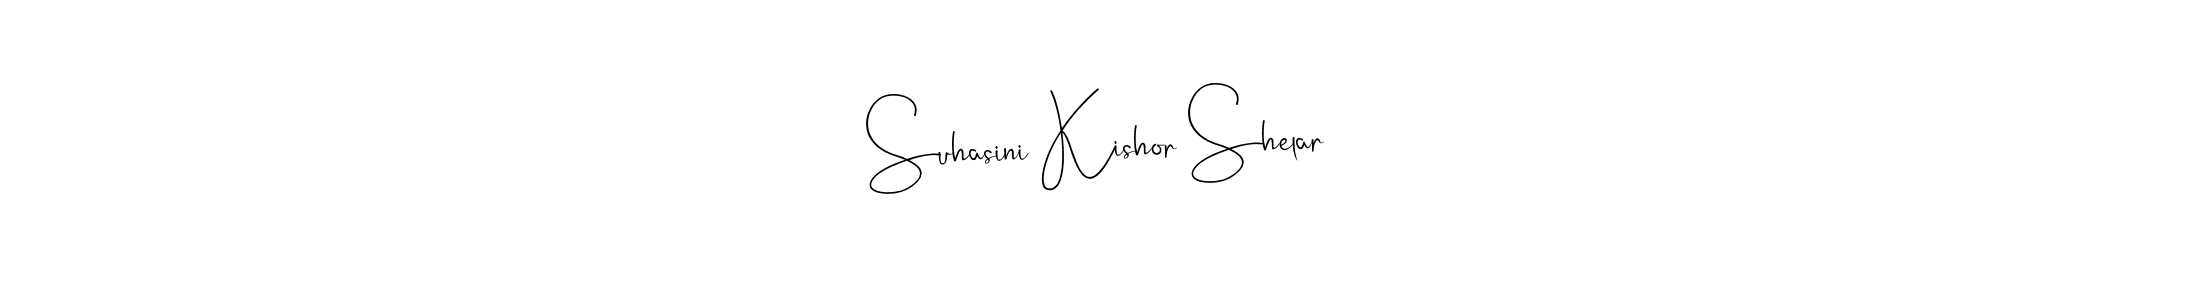 How to Draw Suhasini Kishor Shelar signature style? Andilay-7BmLP is a latest design signature styles for name Suhasini Kishor Shelar. Suhasini Kishor Shelar signature style 4 images and pictures png